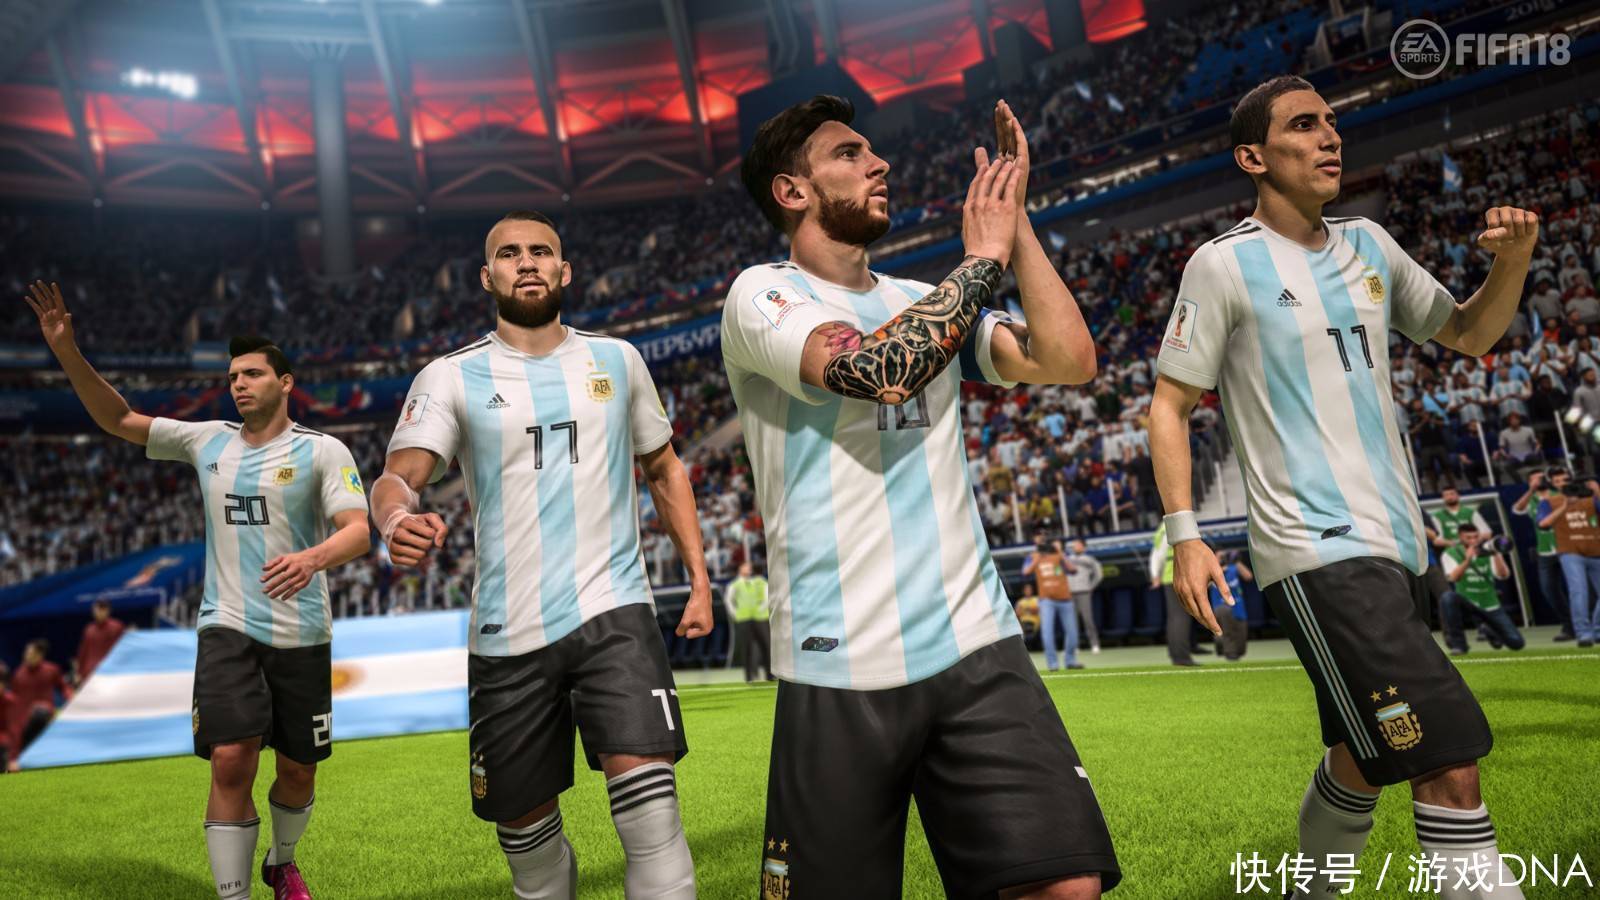 《FIFA18》世界杯DLC首批8K截图曝光 梅西纹